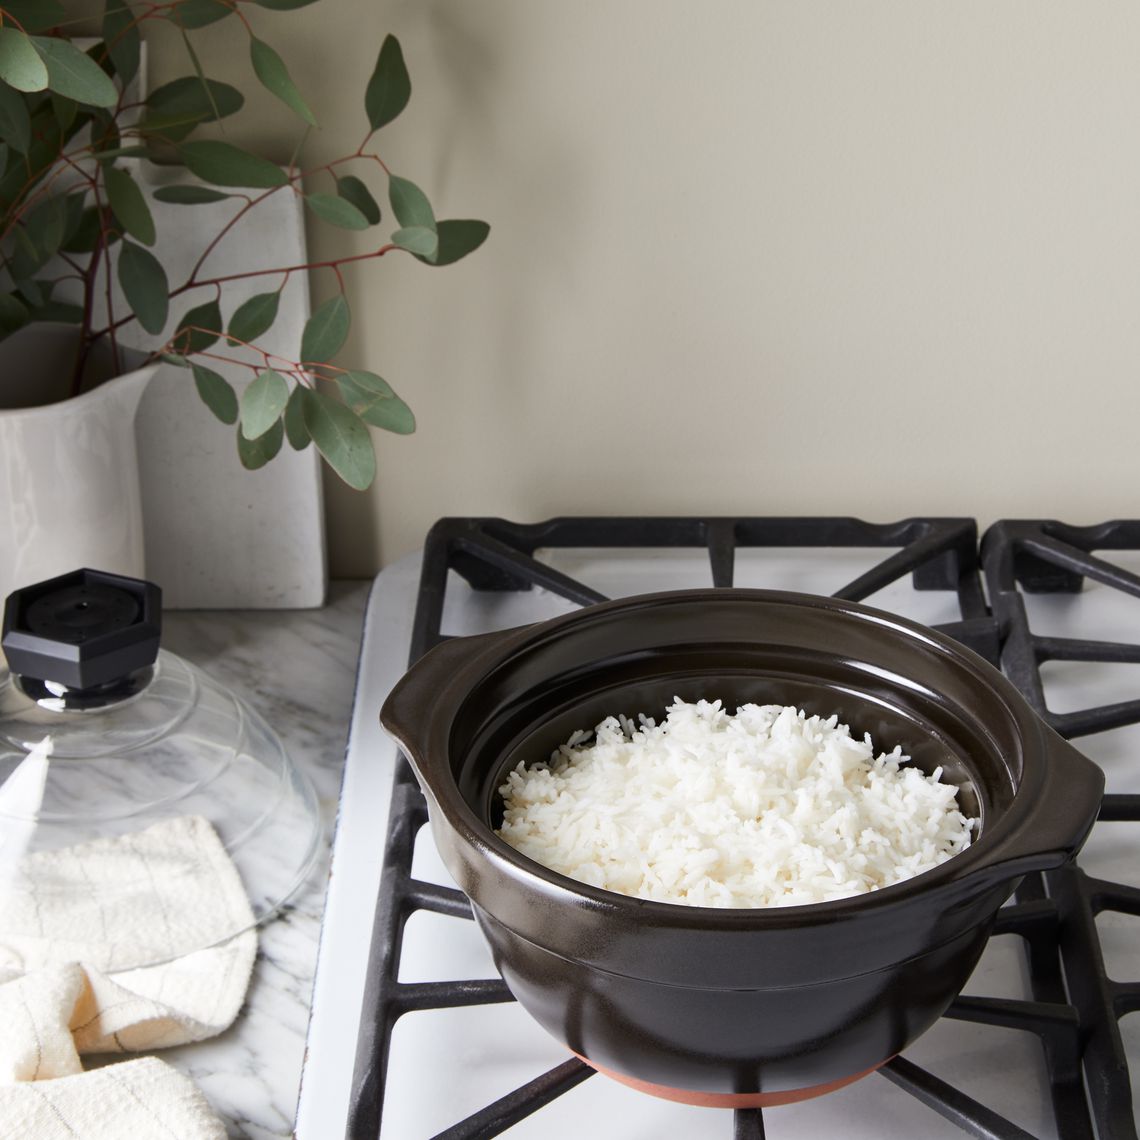 Hario Japanese Rice Cooker Pot, Heatproof Ceramic